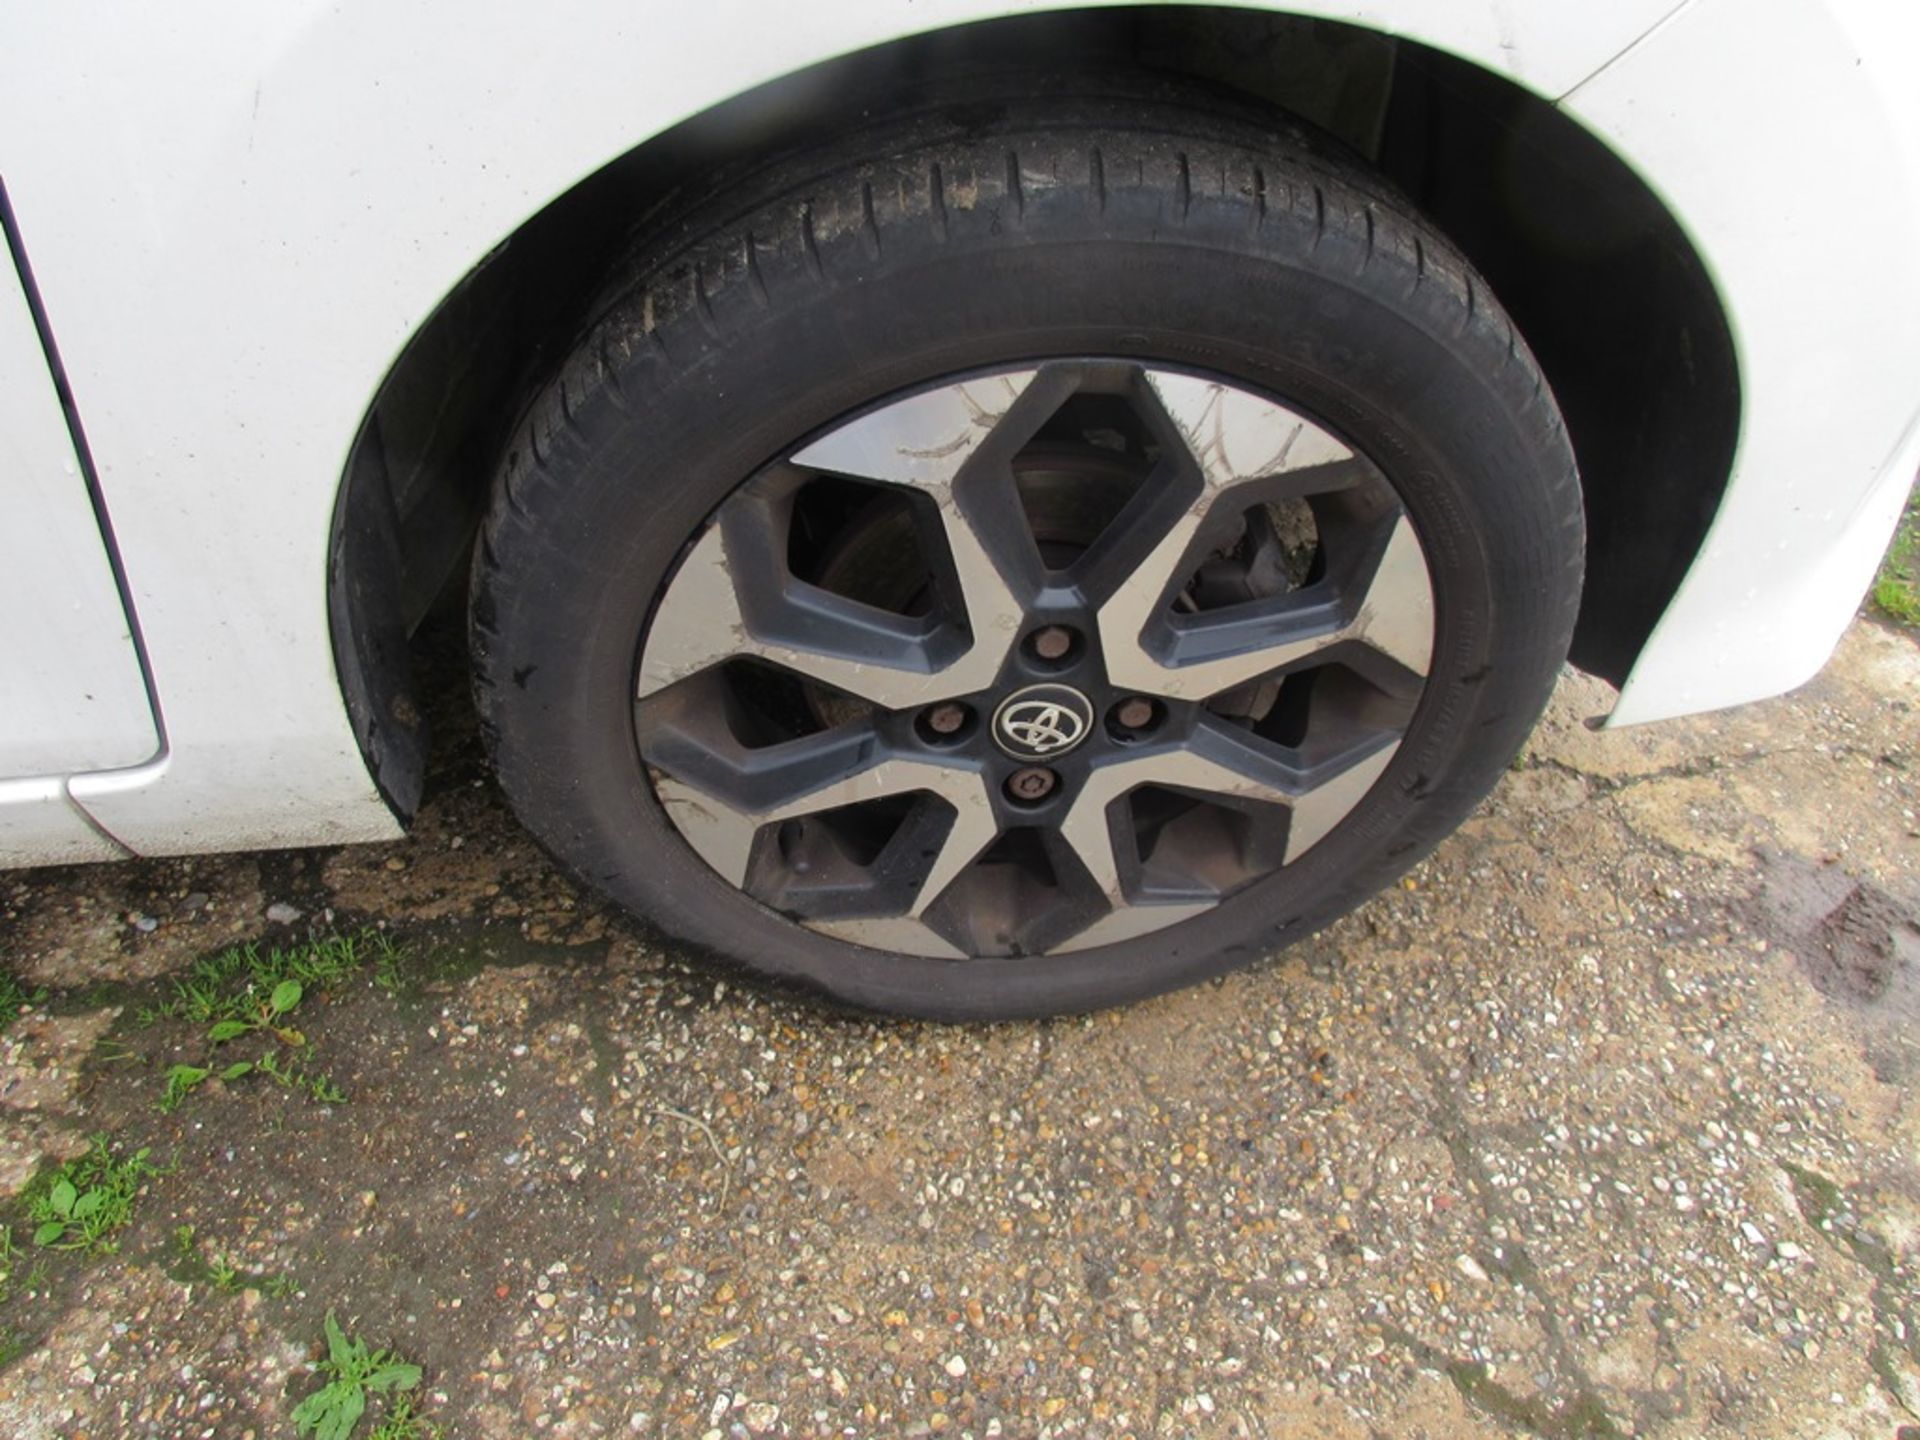 Toyota Aygo X-Plore Vvt-I petrol hatchback, 68bhp Registration: WF68 YBD Recorded mileage: 51,973 - Image 8 of 14